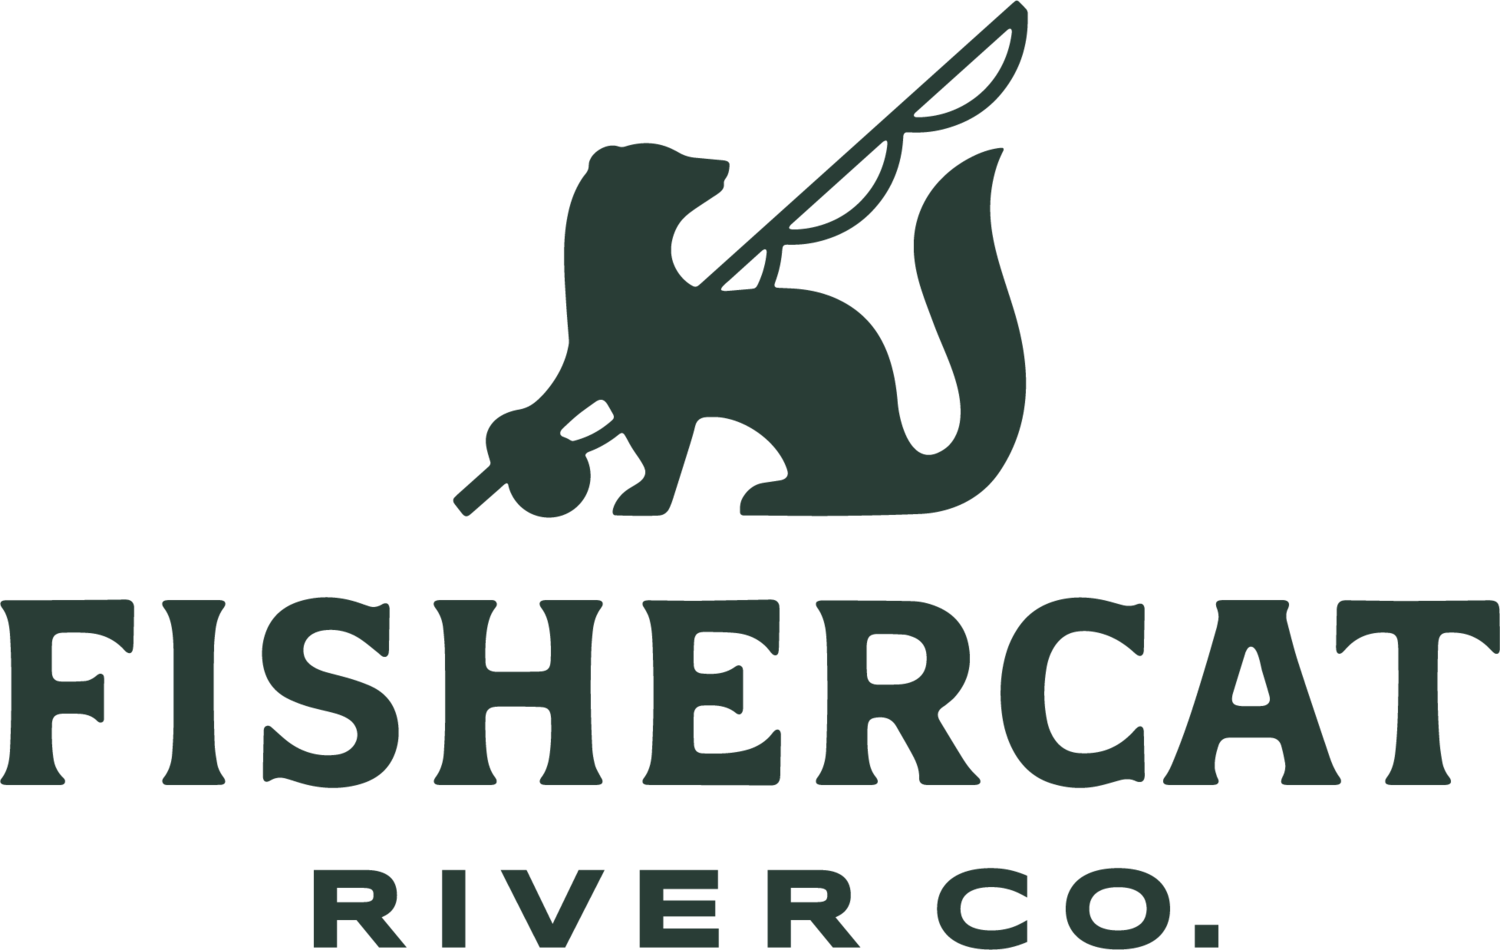 Fishercat River Company